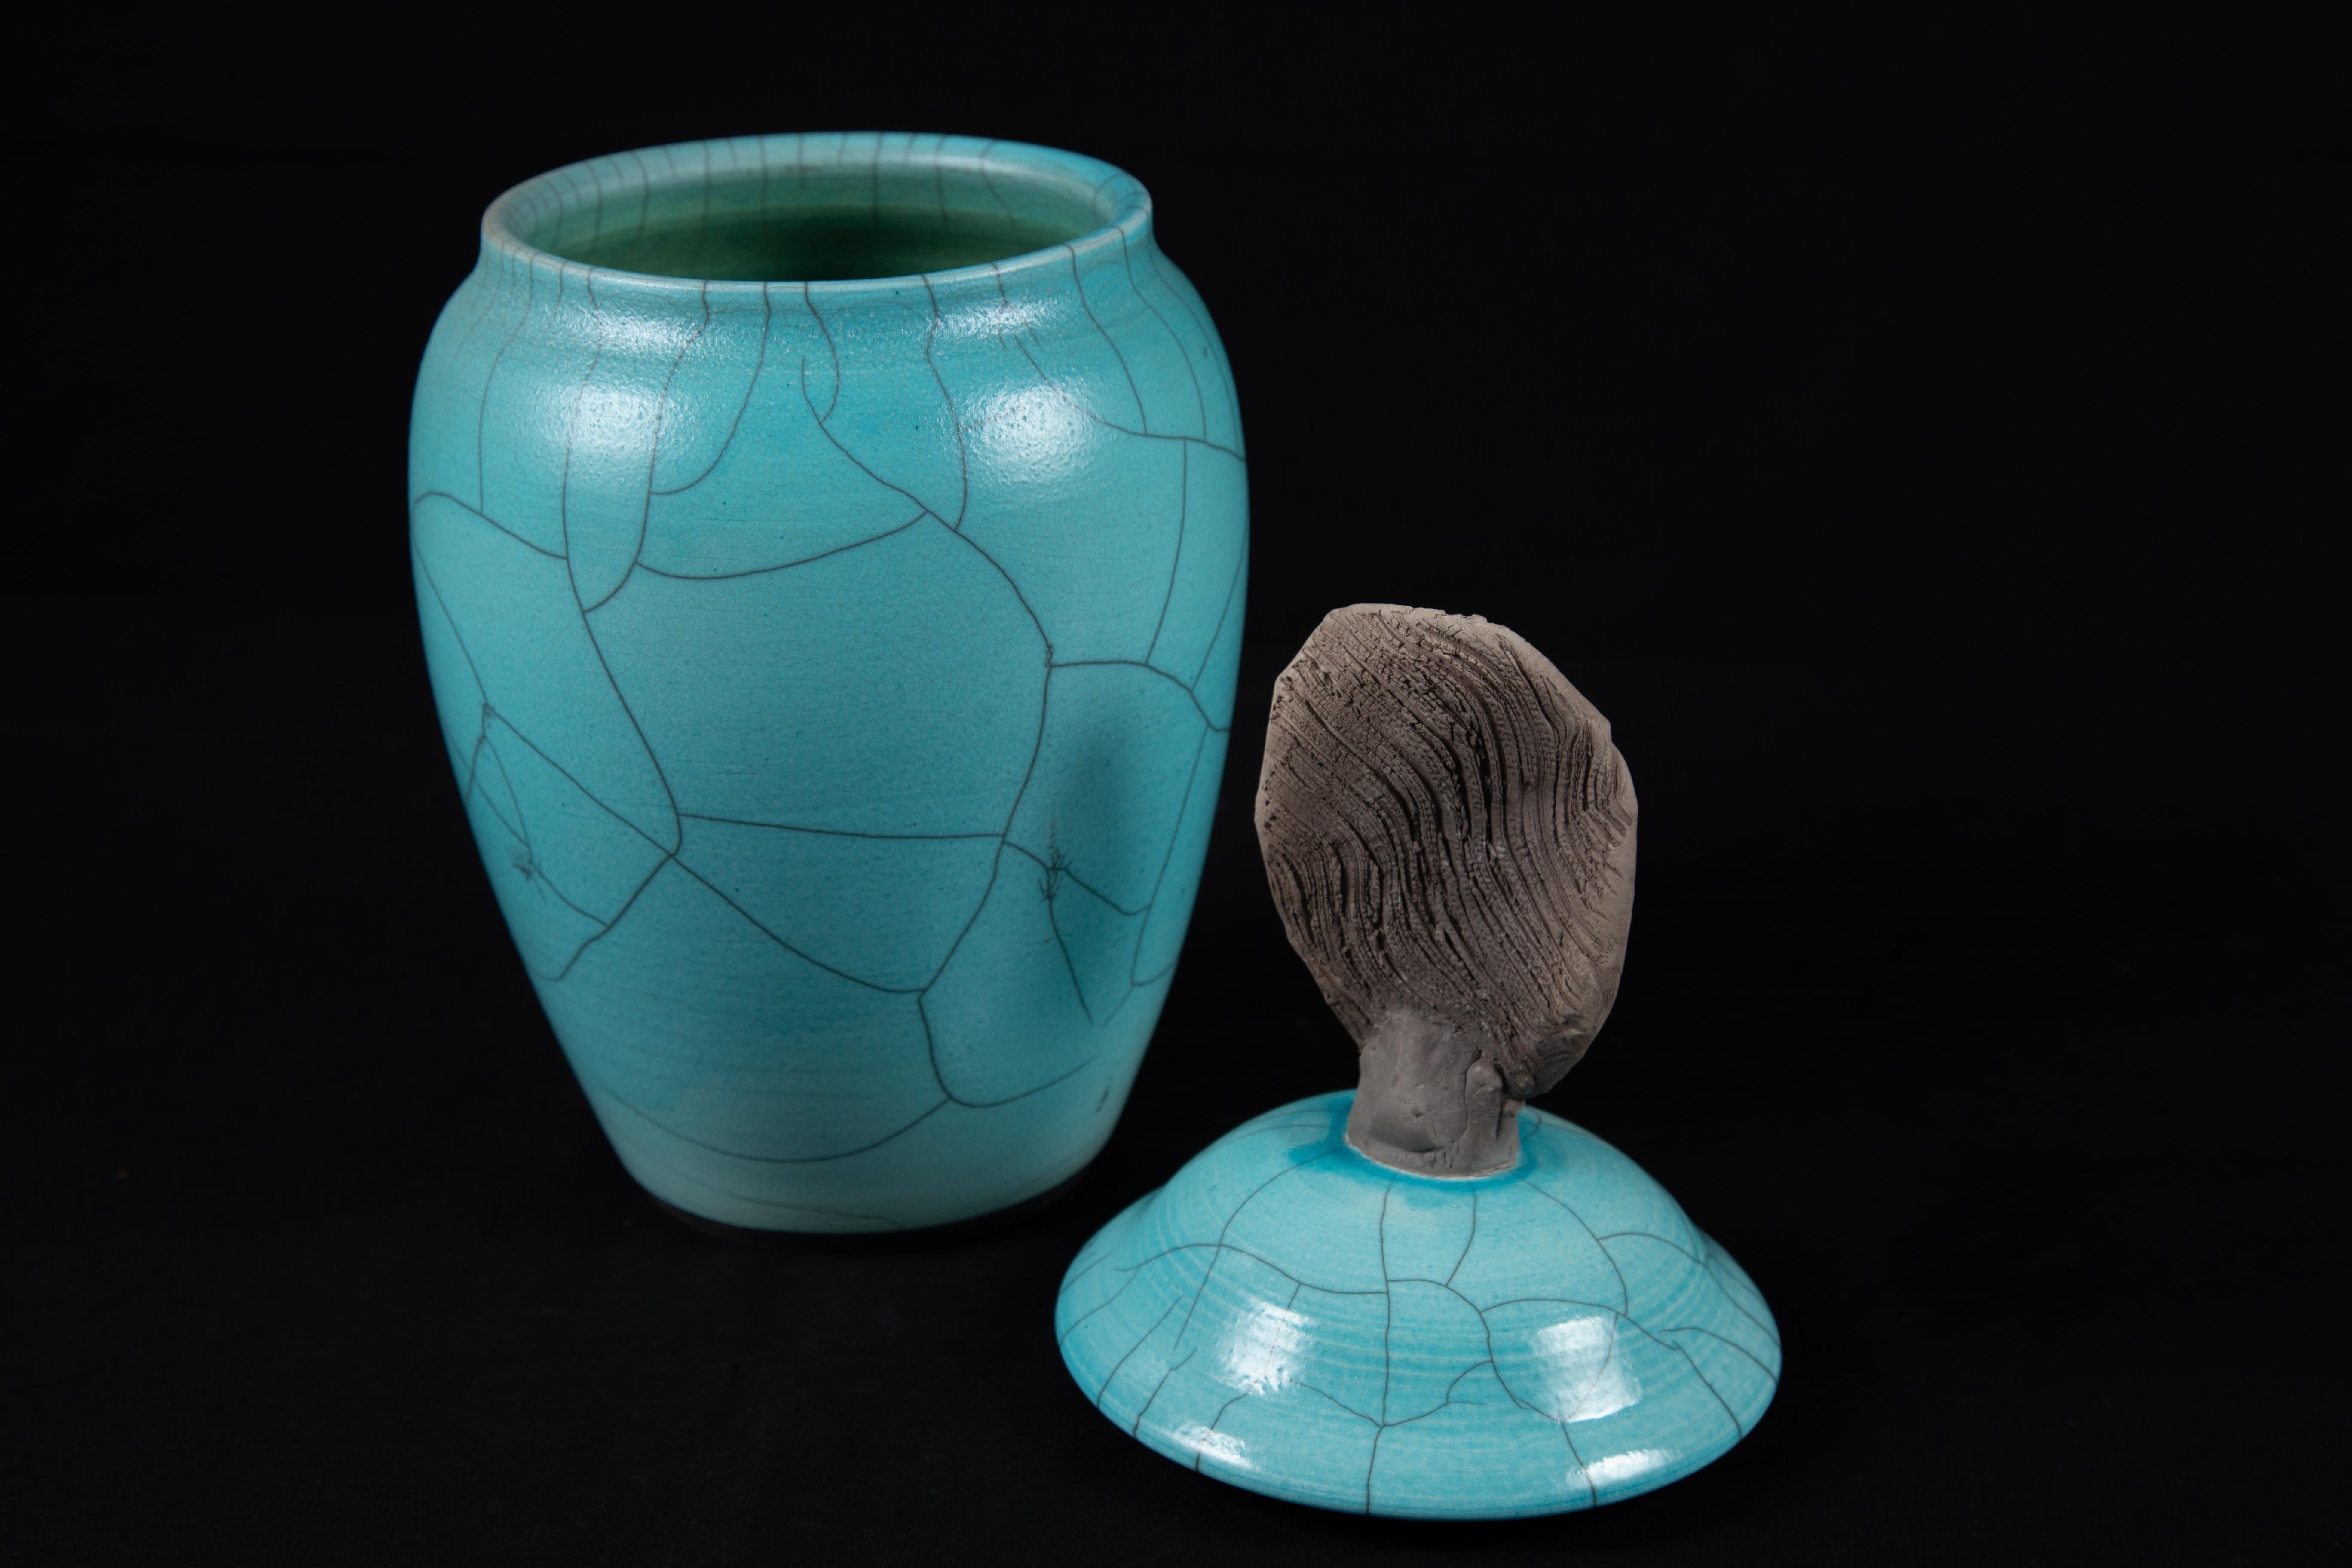 Abalone, Raku-Keramik-Töpferwaren mit türkisfarbenem Deckel, Western Art – Sculpture von Mark Sherman